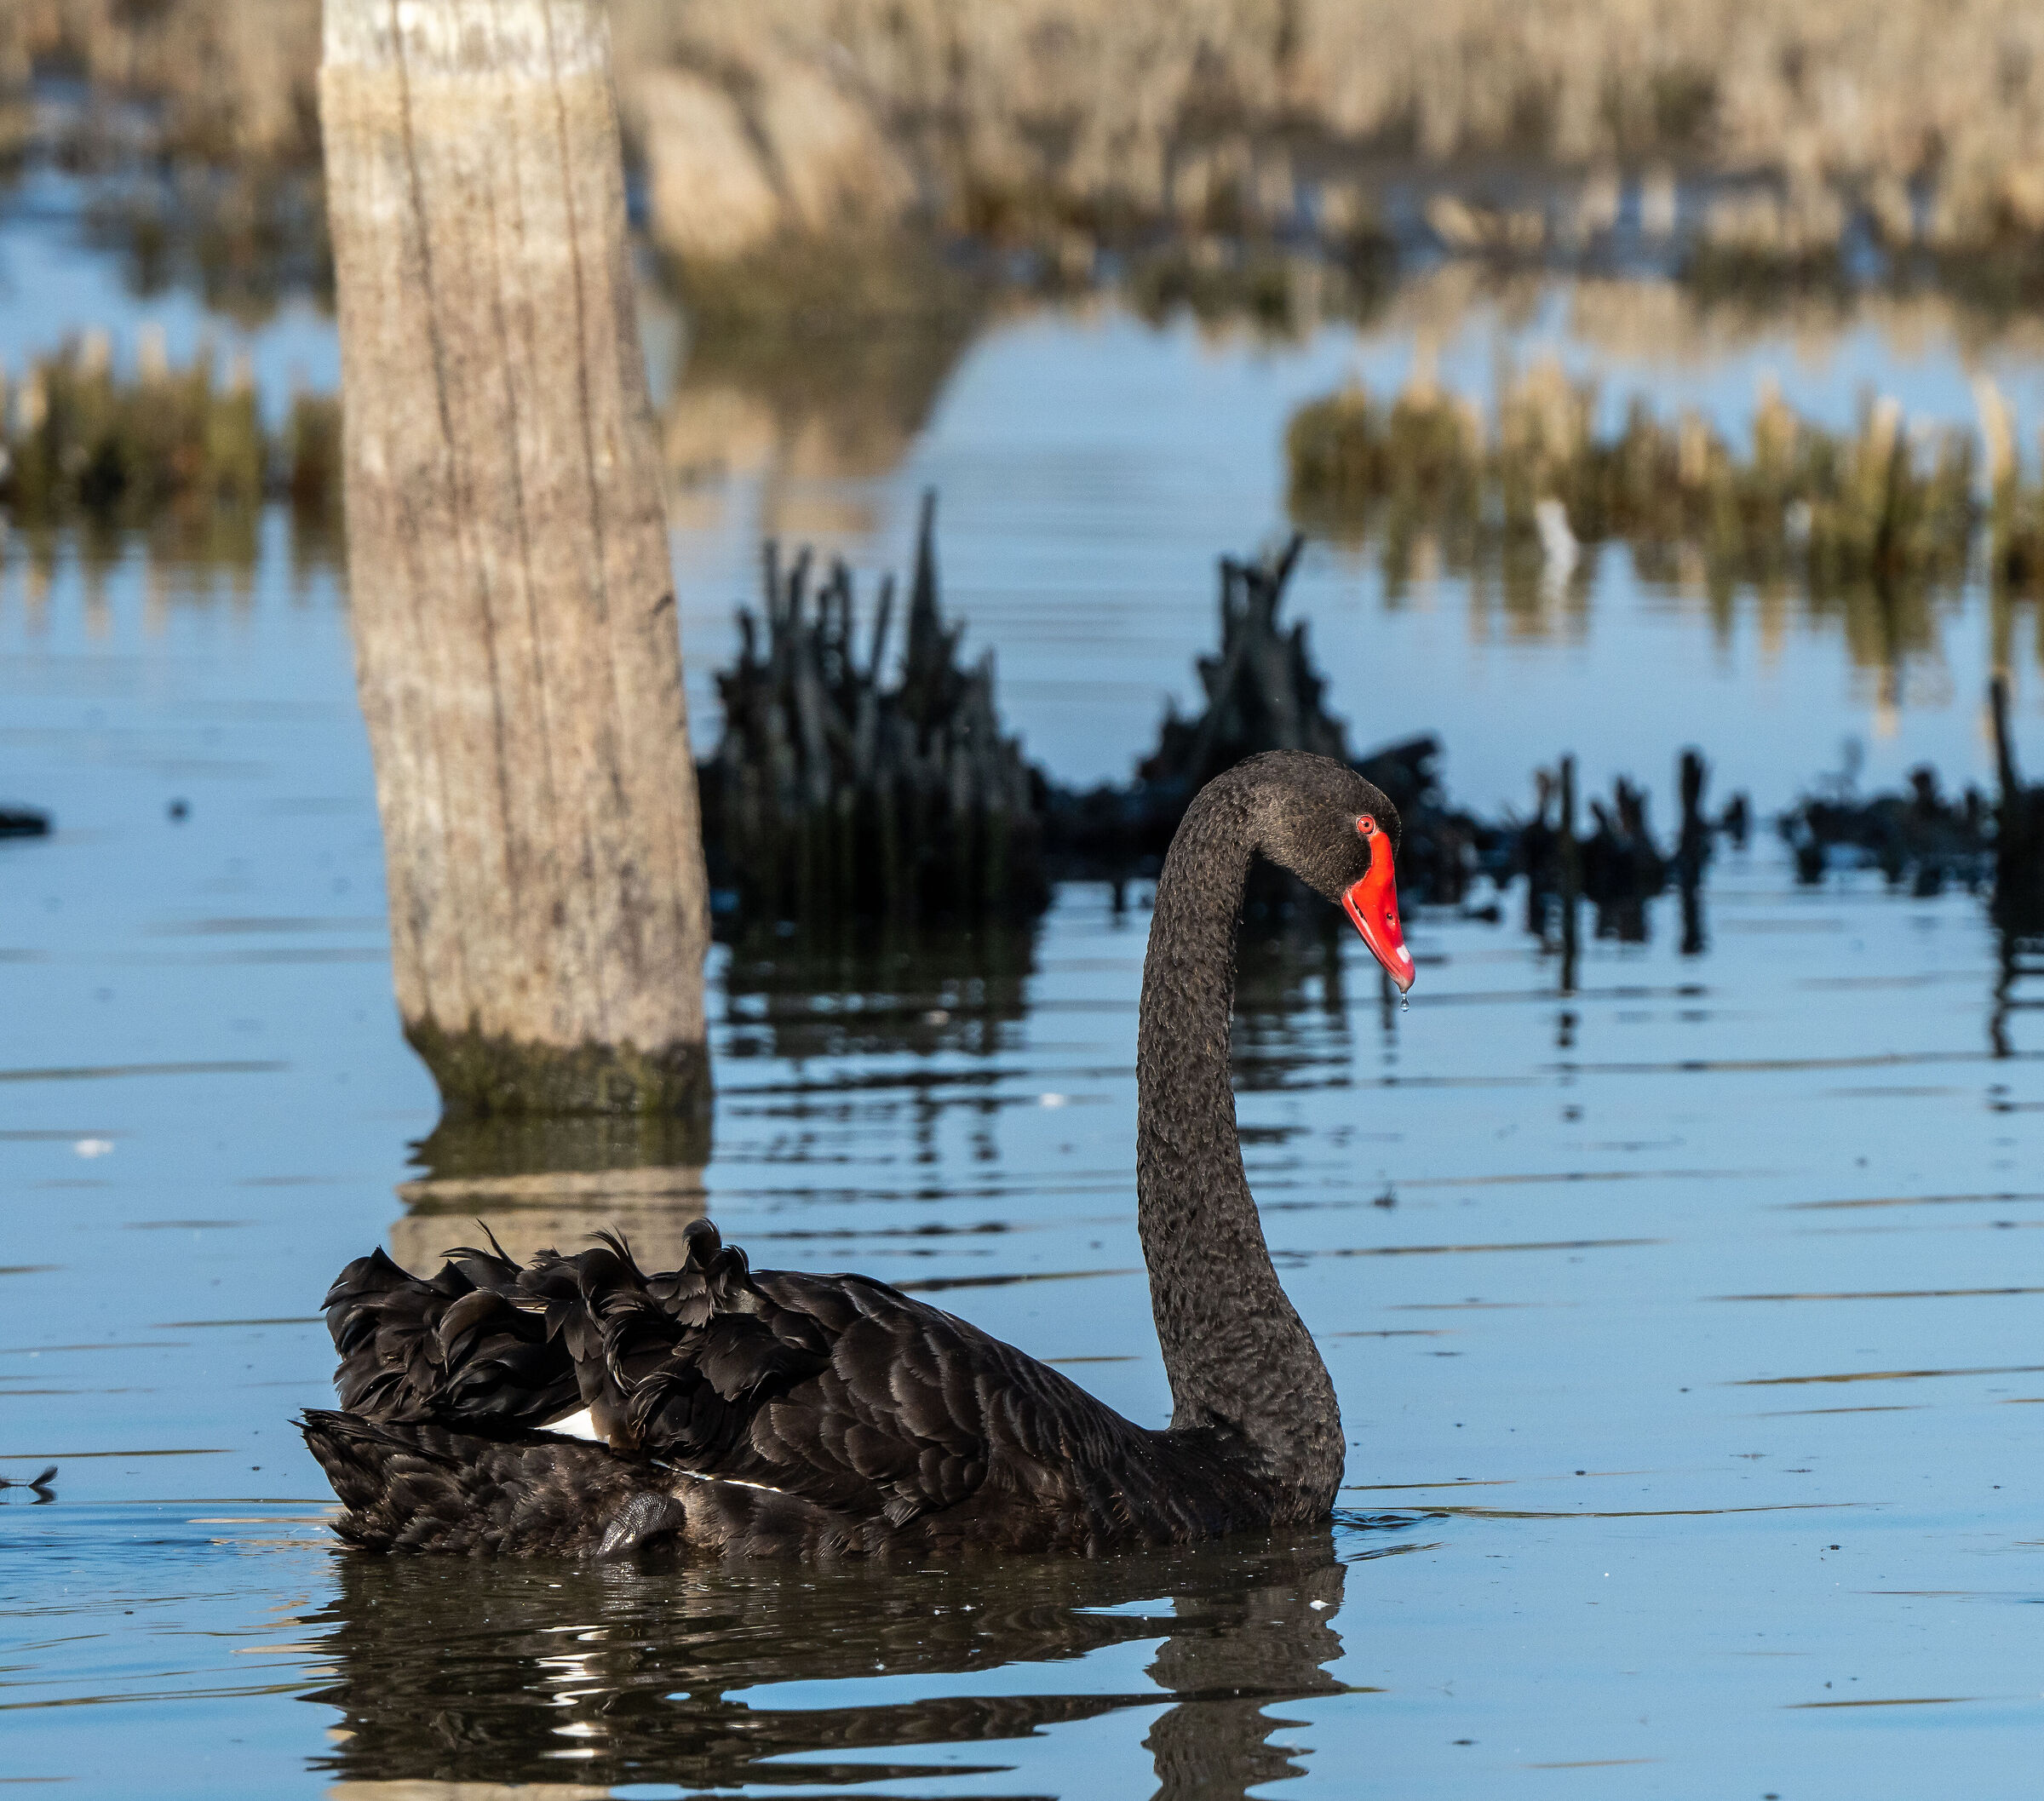 The black swan...